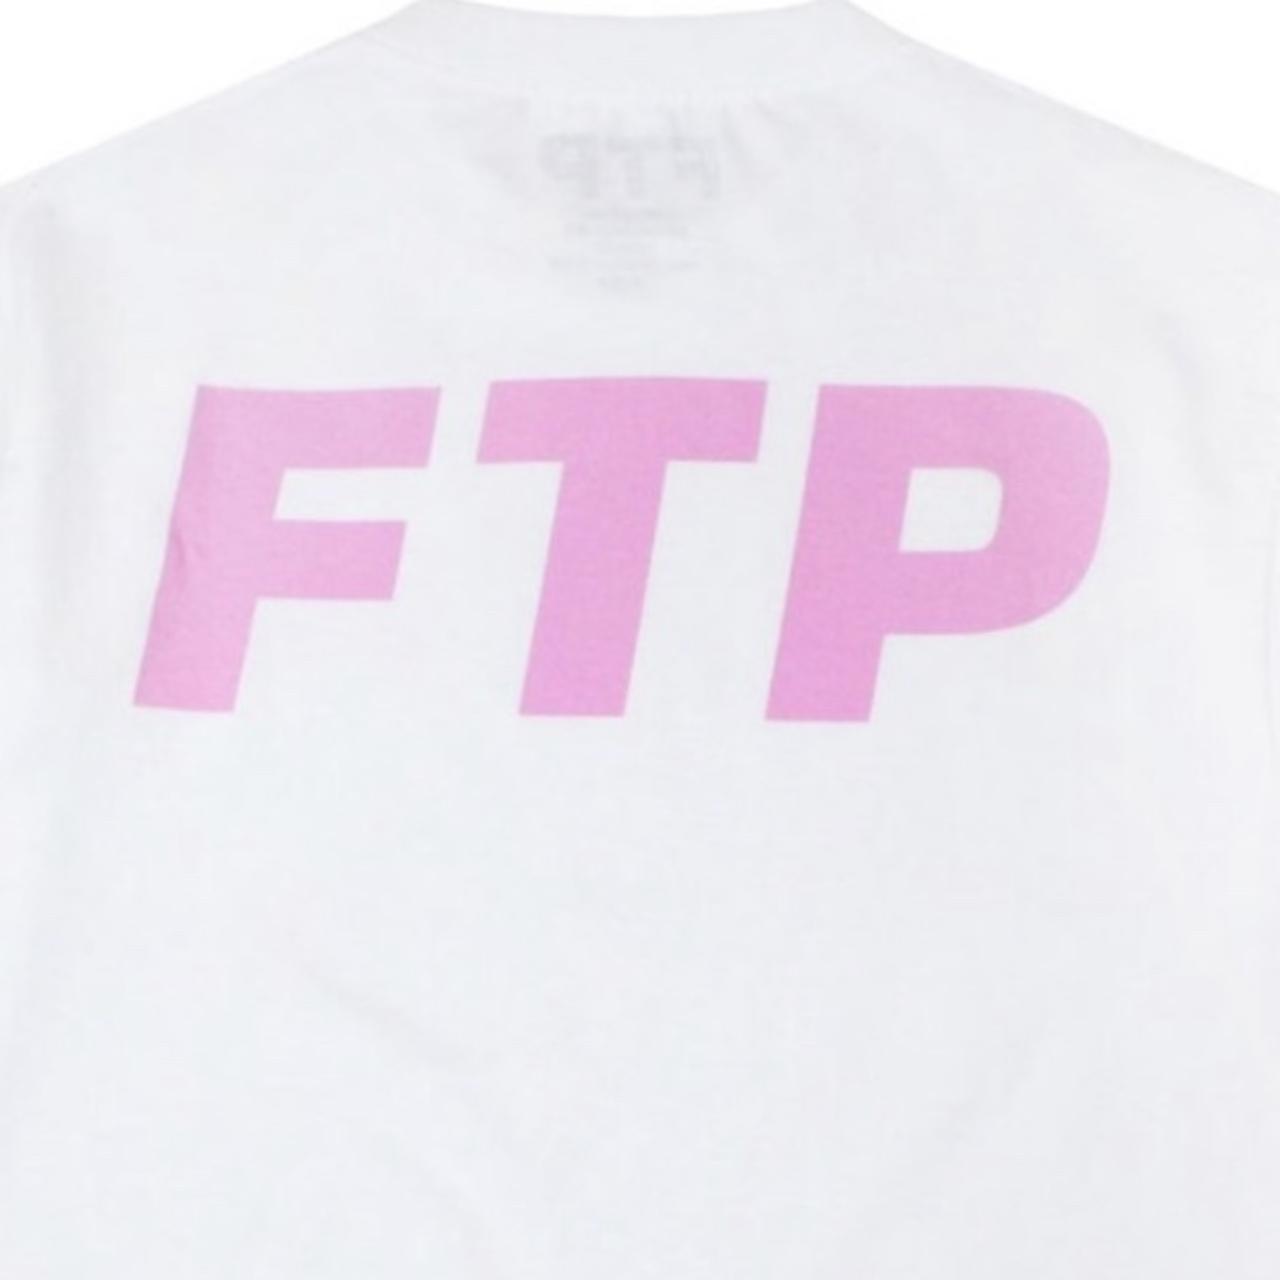 FTP BREAST CANCER LOGO TEE XL Tシャツ-